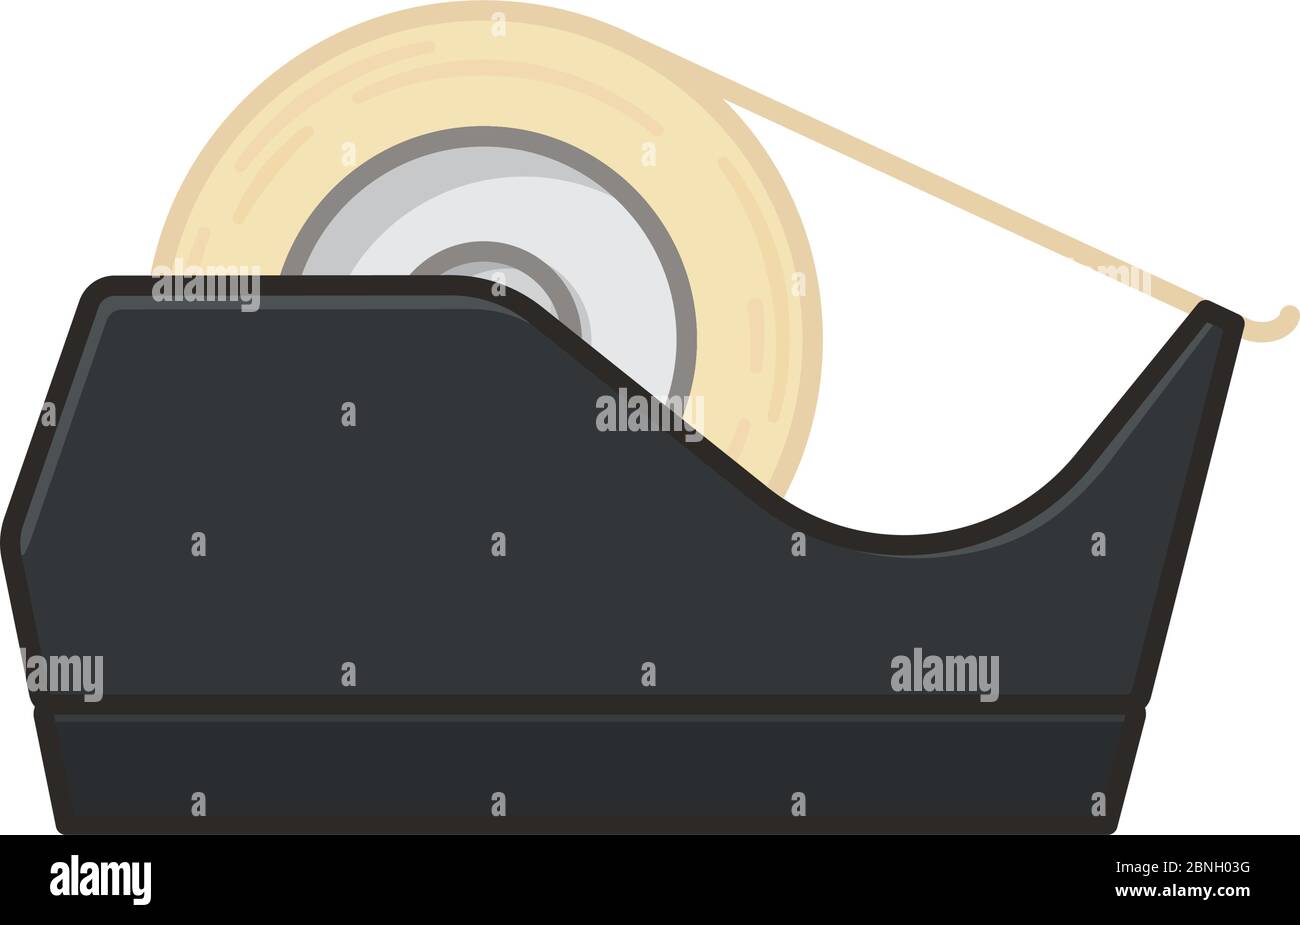 Klebebandspender Vektorgrafik für Cellophan Tape Day am 27. Mai. Symbol für isolierte Bürogeräte. Stock Vektor